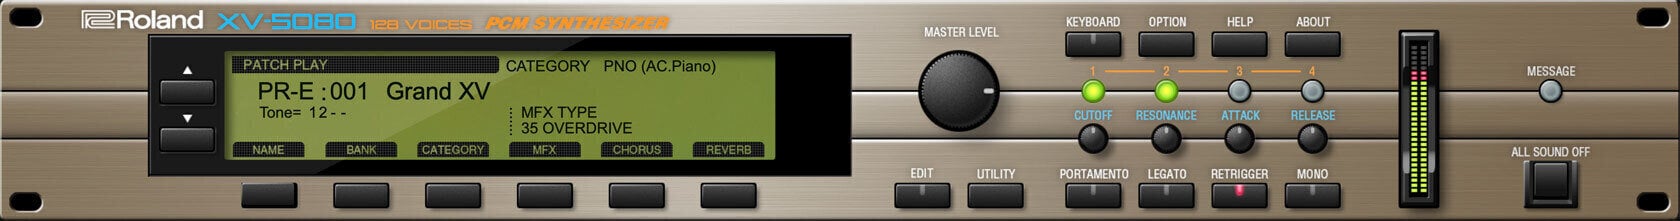 VST Instrument Studio Software Roland XV-5080 Key (Digital product)